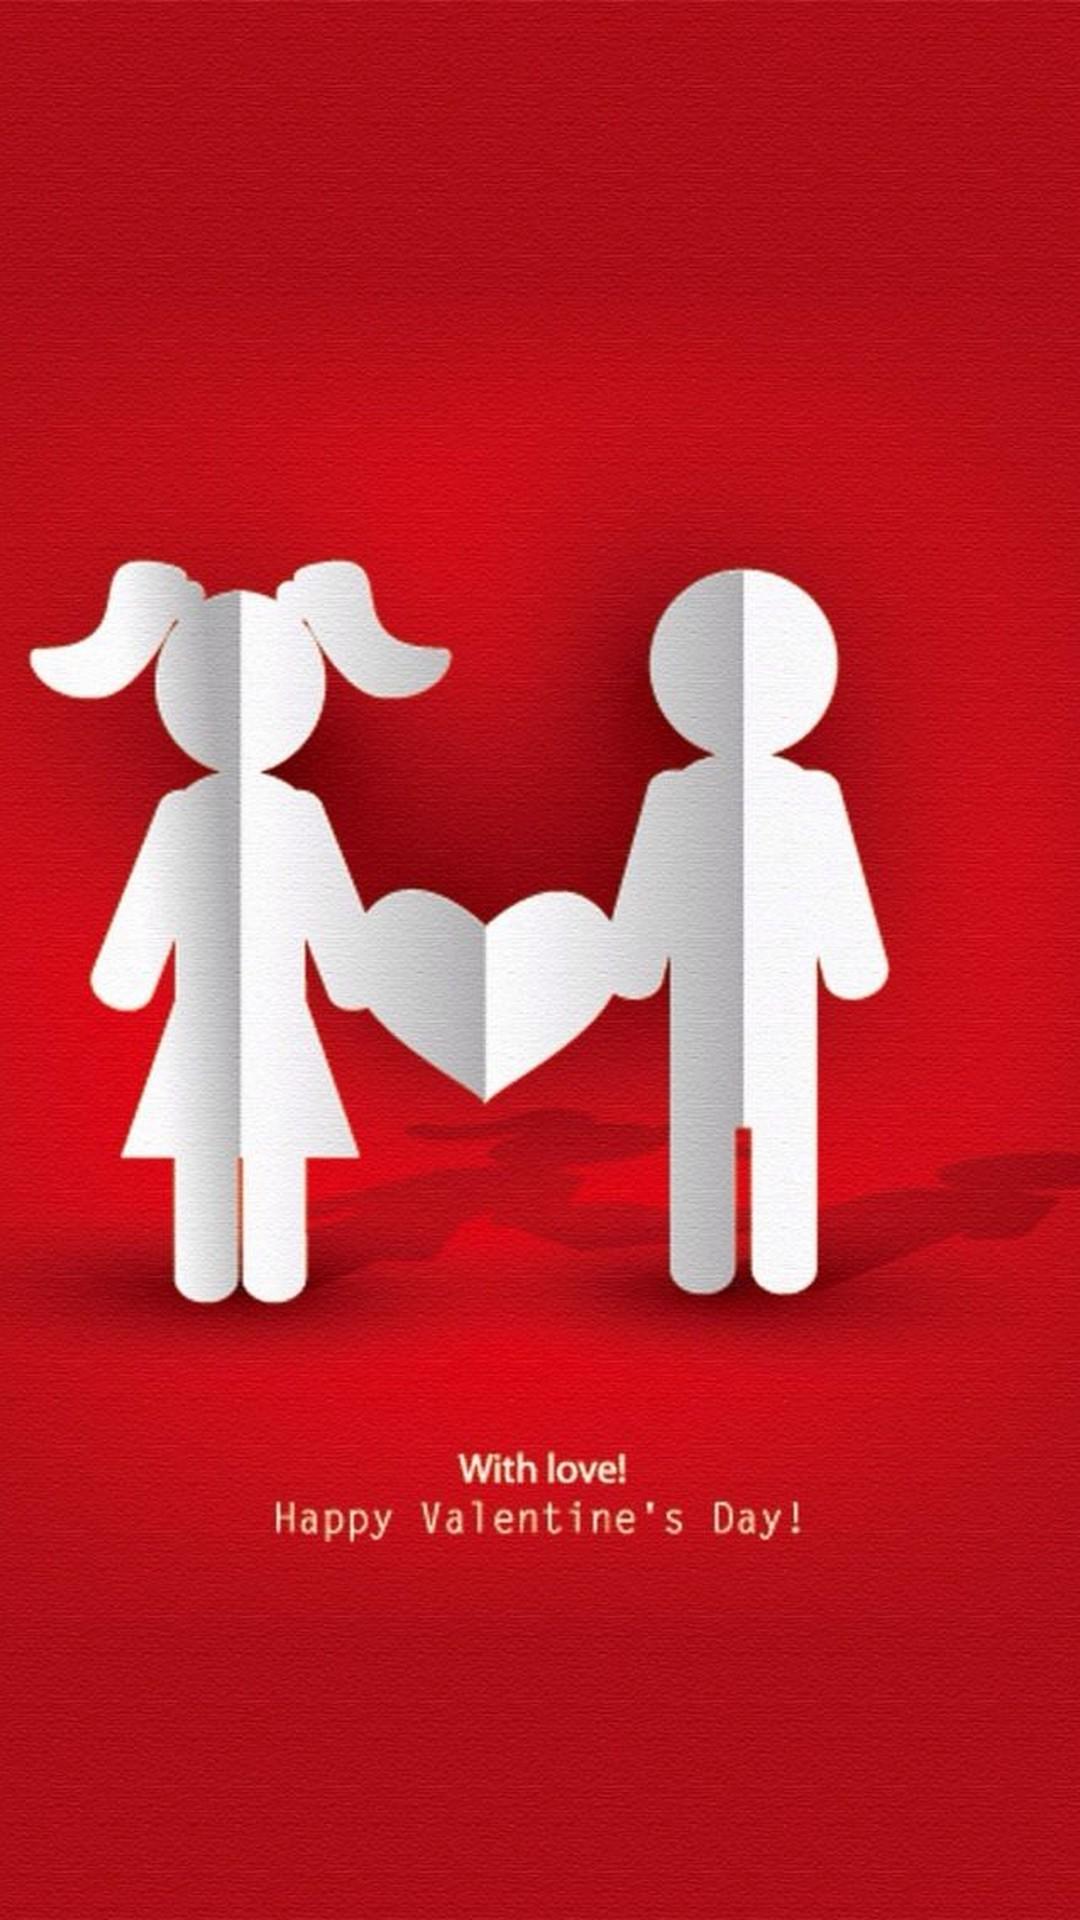 Red Valentine Day iPhone Wallpaper .wallpapercute.com